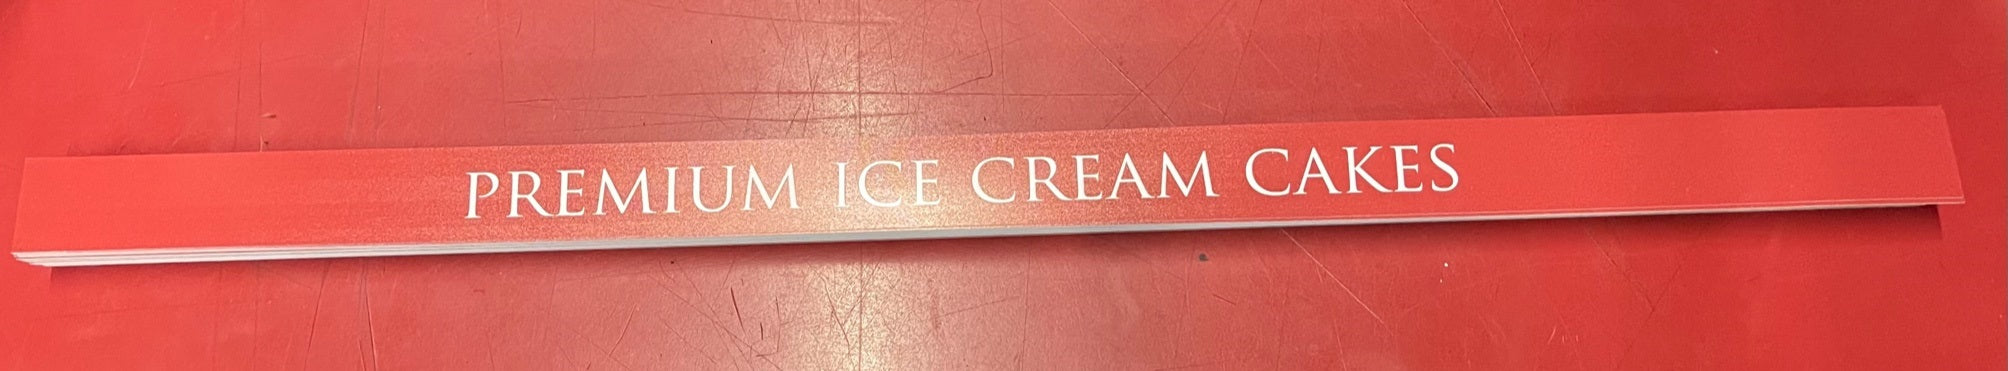 Premium Ice Cream Cakes Price Channel Molding Shelf Strips-24"W x 1.25"H -10 pieces